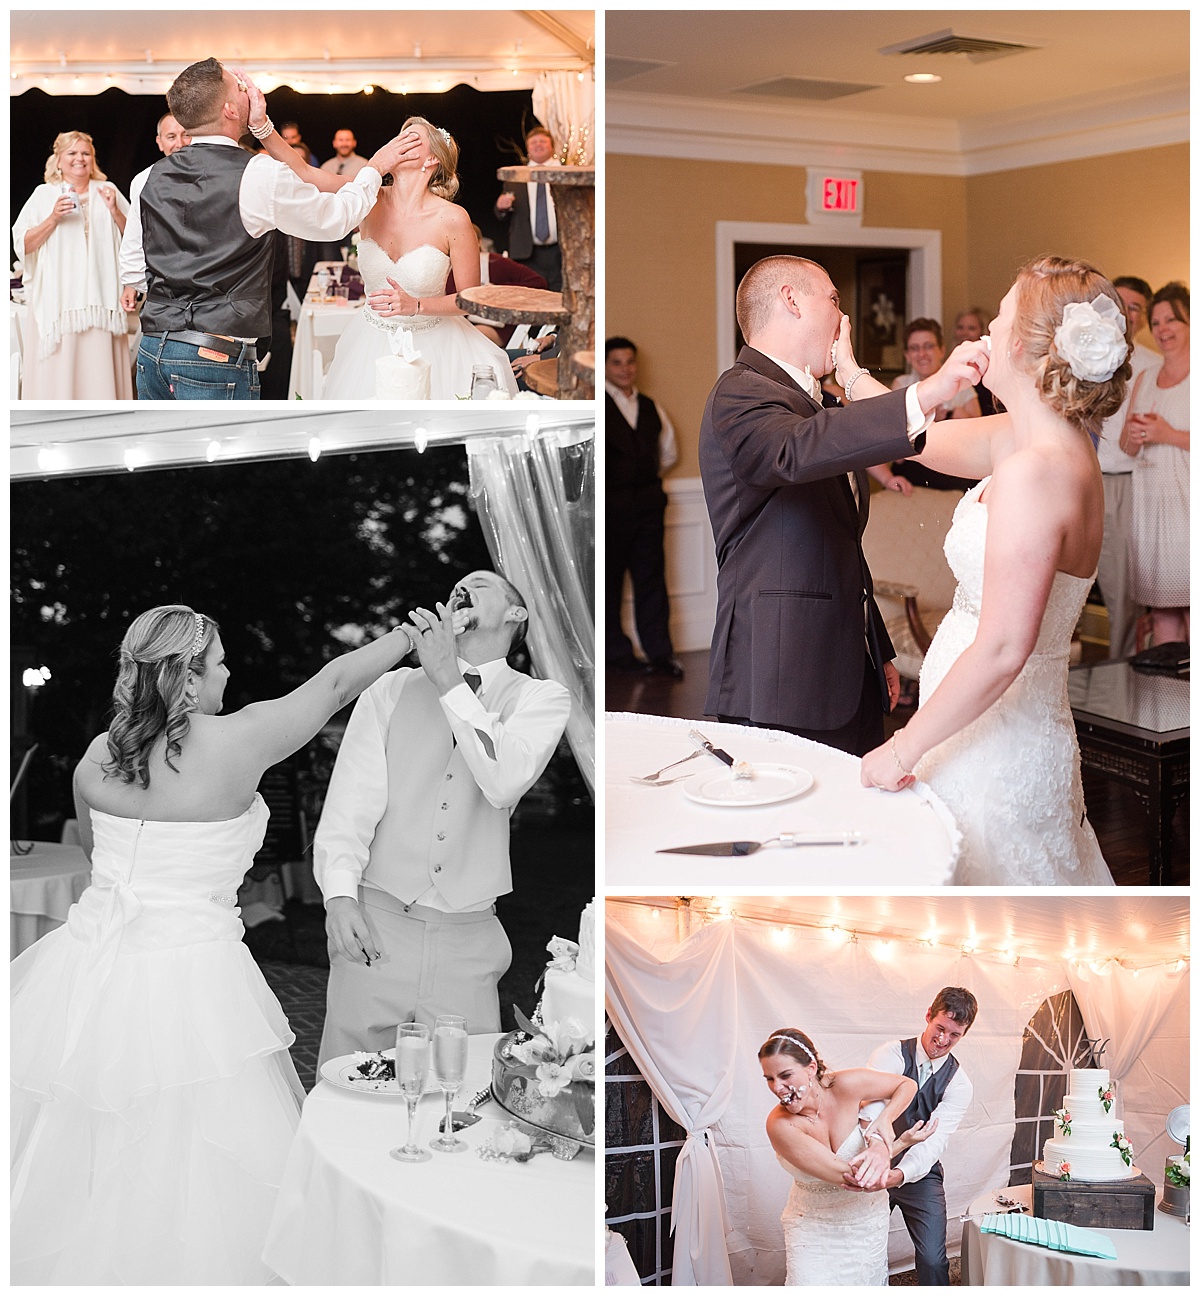 Central Virginia Wedding, Richmond Wedding, Chesterfield Wedding, Prince George Weddings, Caiti Garter Photography, The Best Of 2016 Weddings